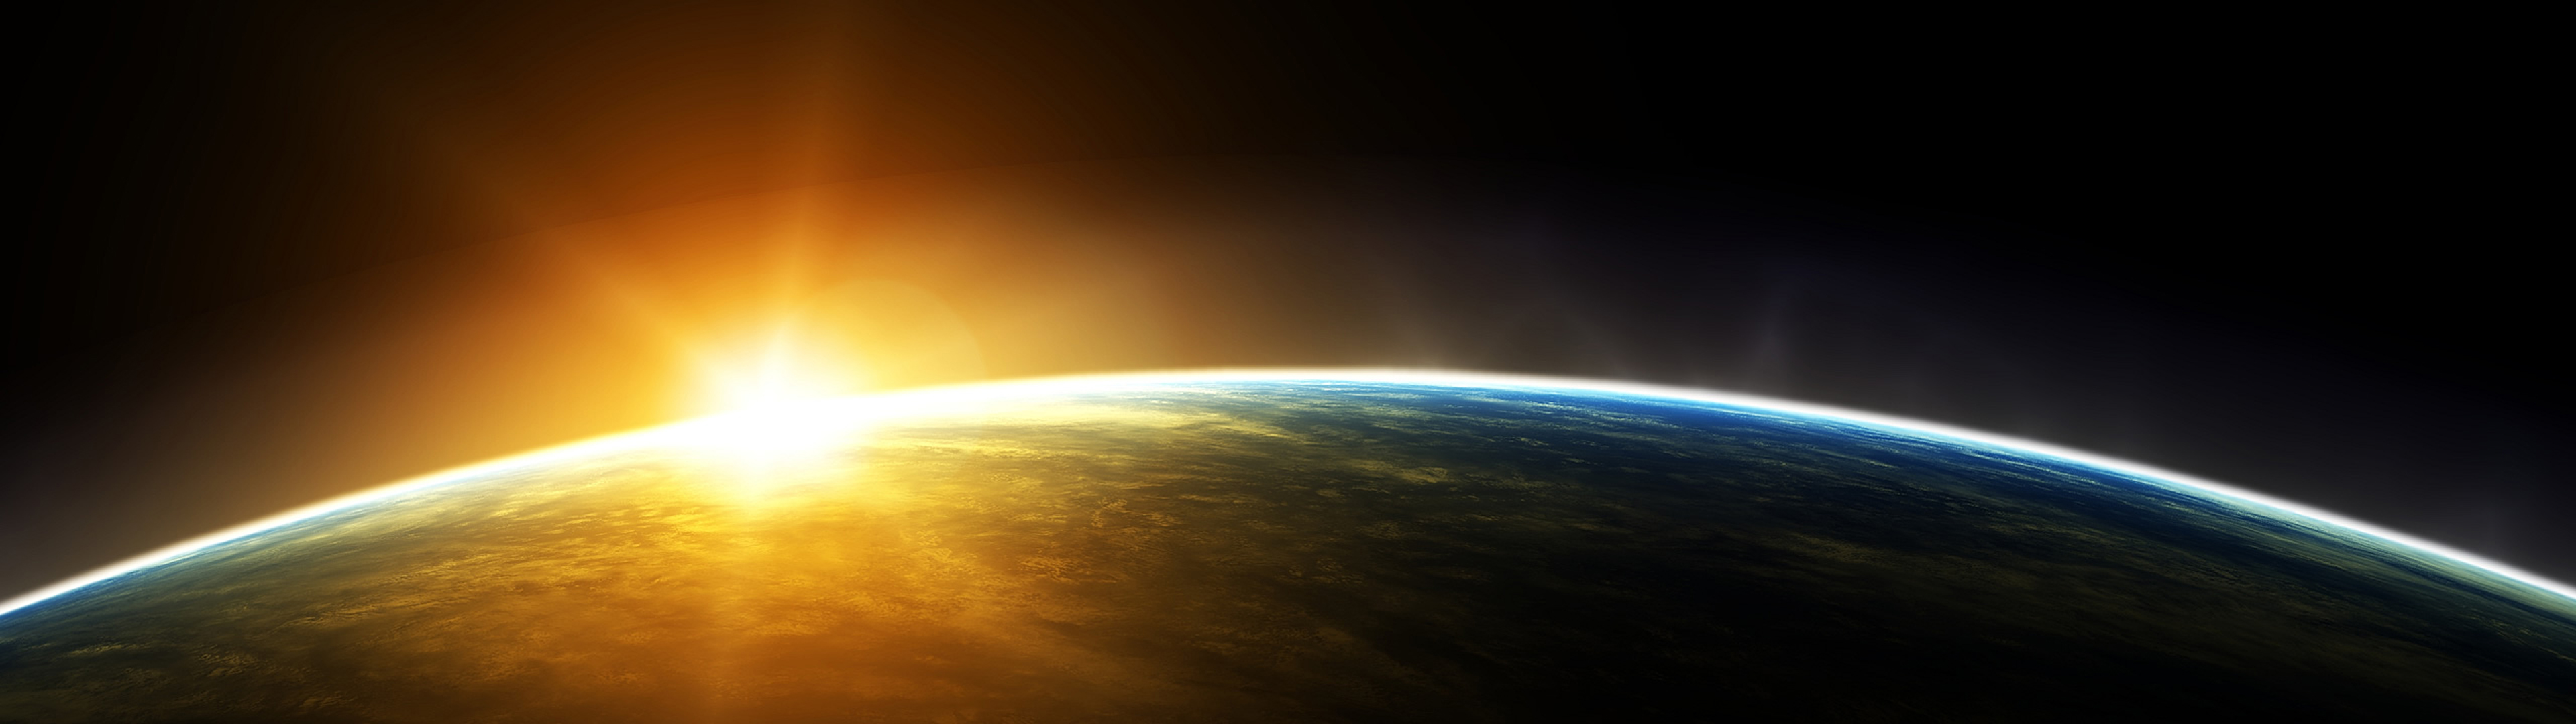 sunrise, outer space, planets, Earth - desktop wallpaper